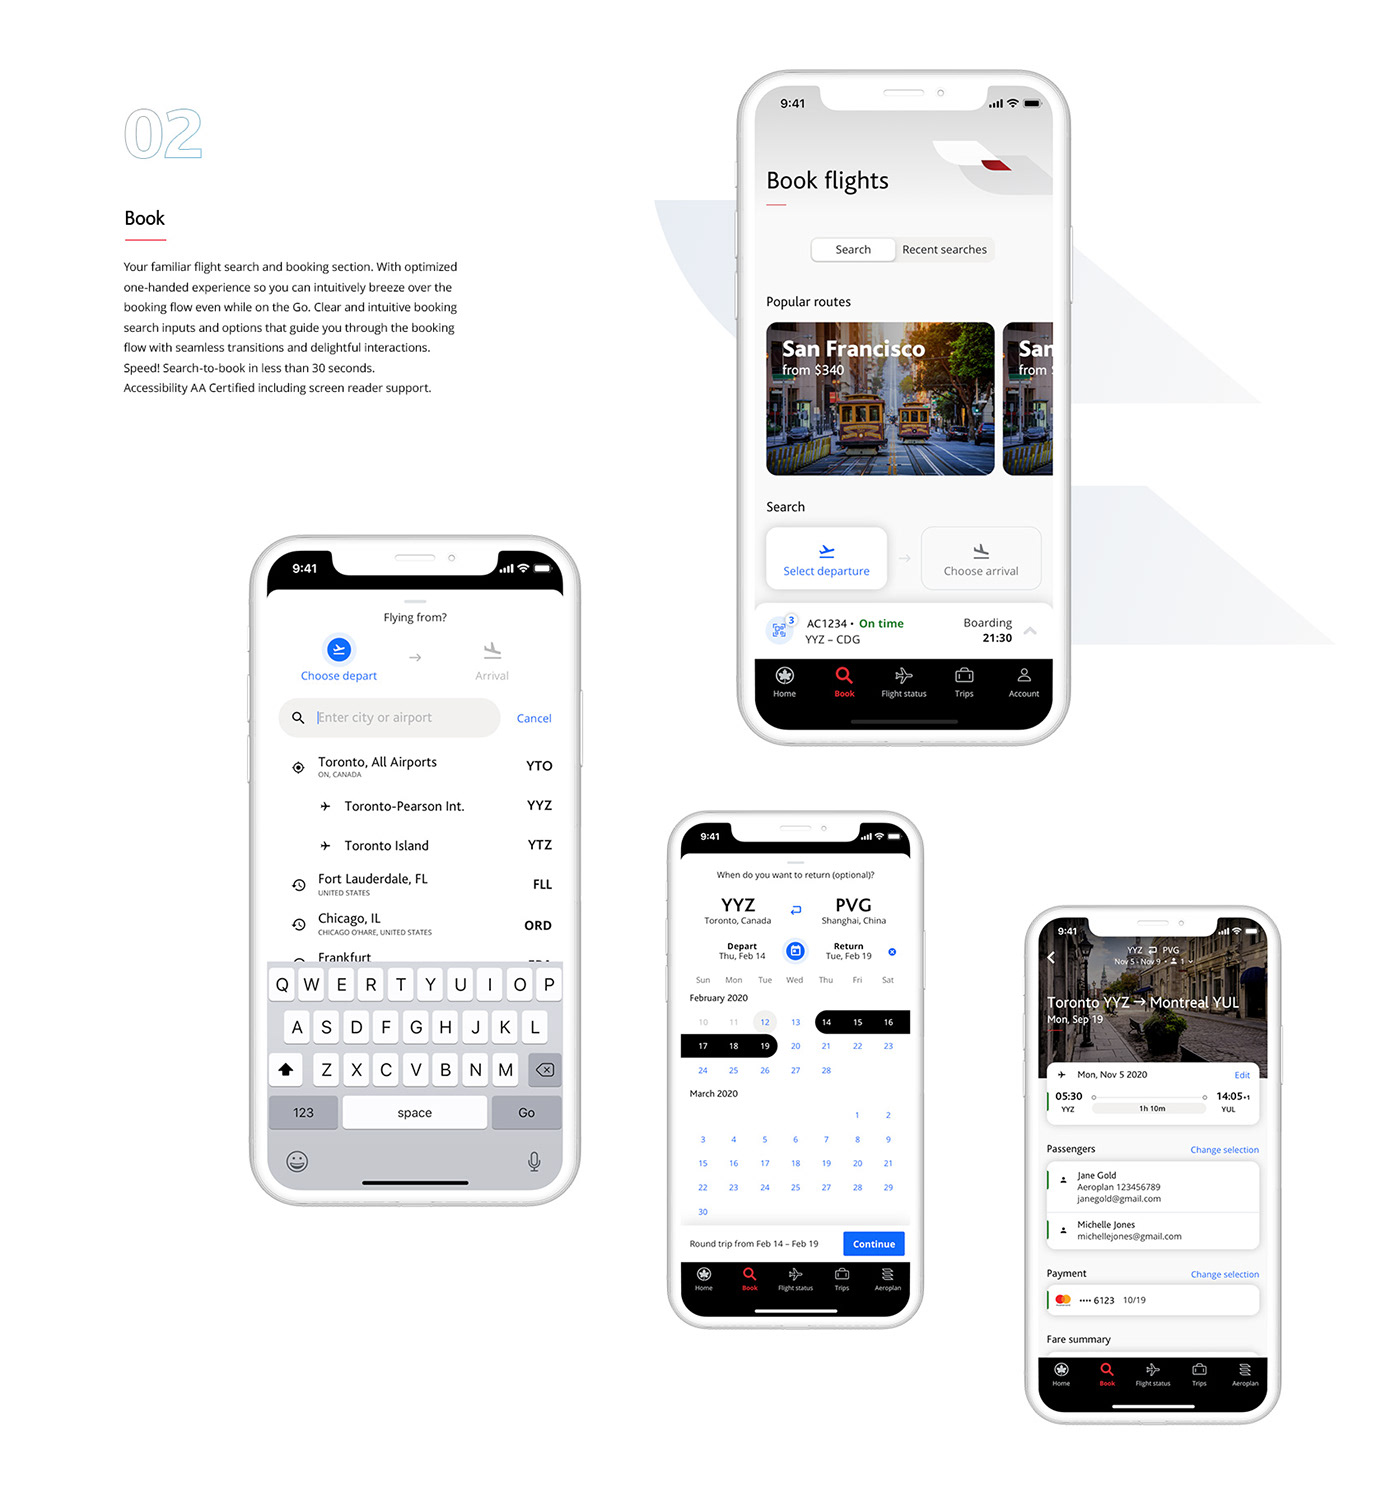 Air Canada airline app design Interaction design  Mobile app product design  Travel UI/UX user interface